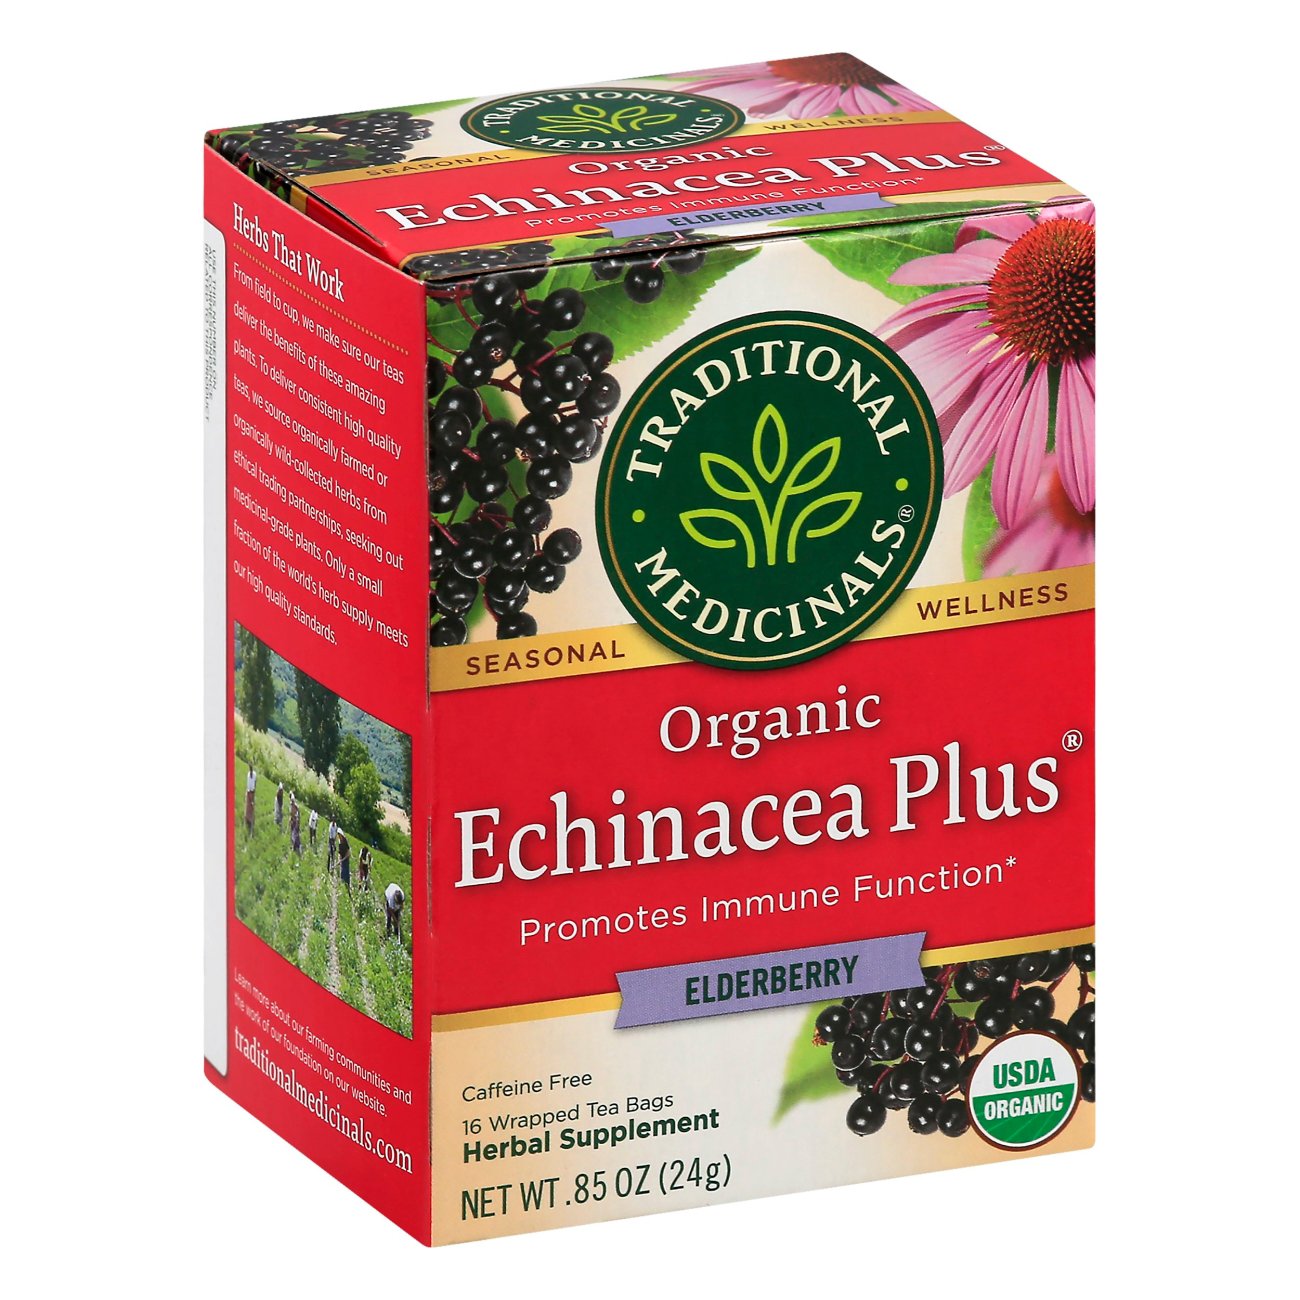 Yogi Tea Elderberry Lemon Balm Immune Plus Stress, Herbal Tea Bags, 16  Count 